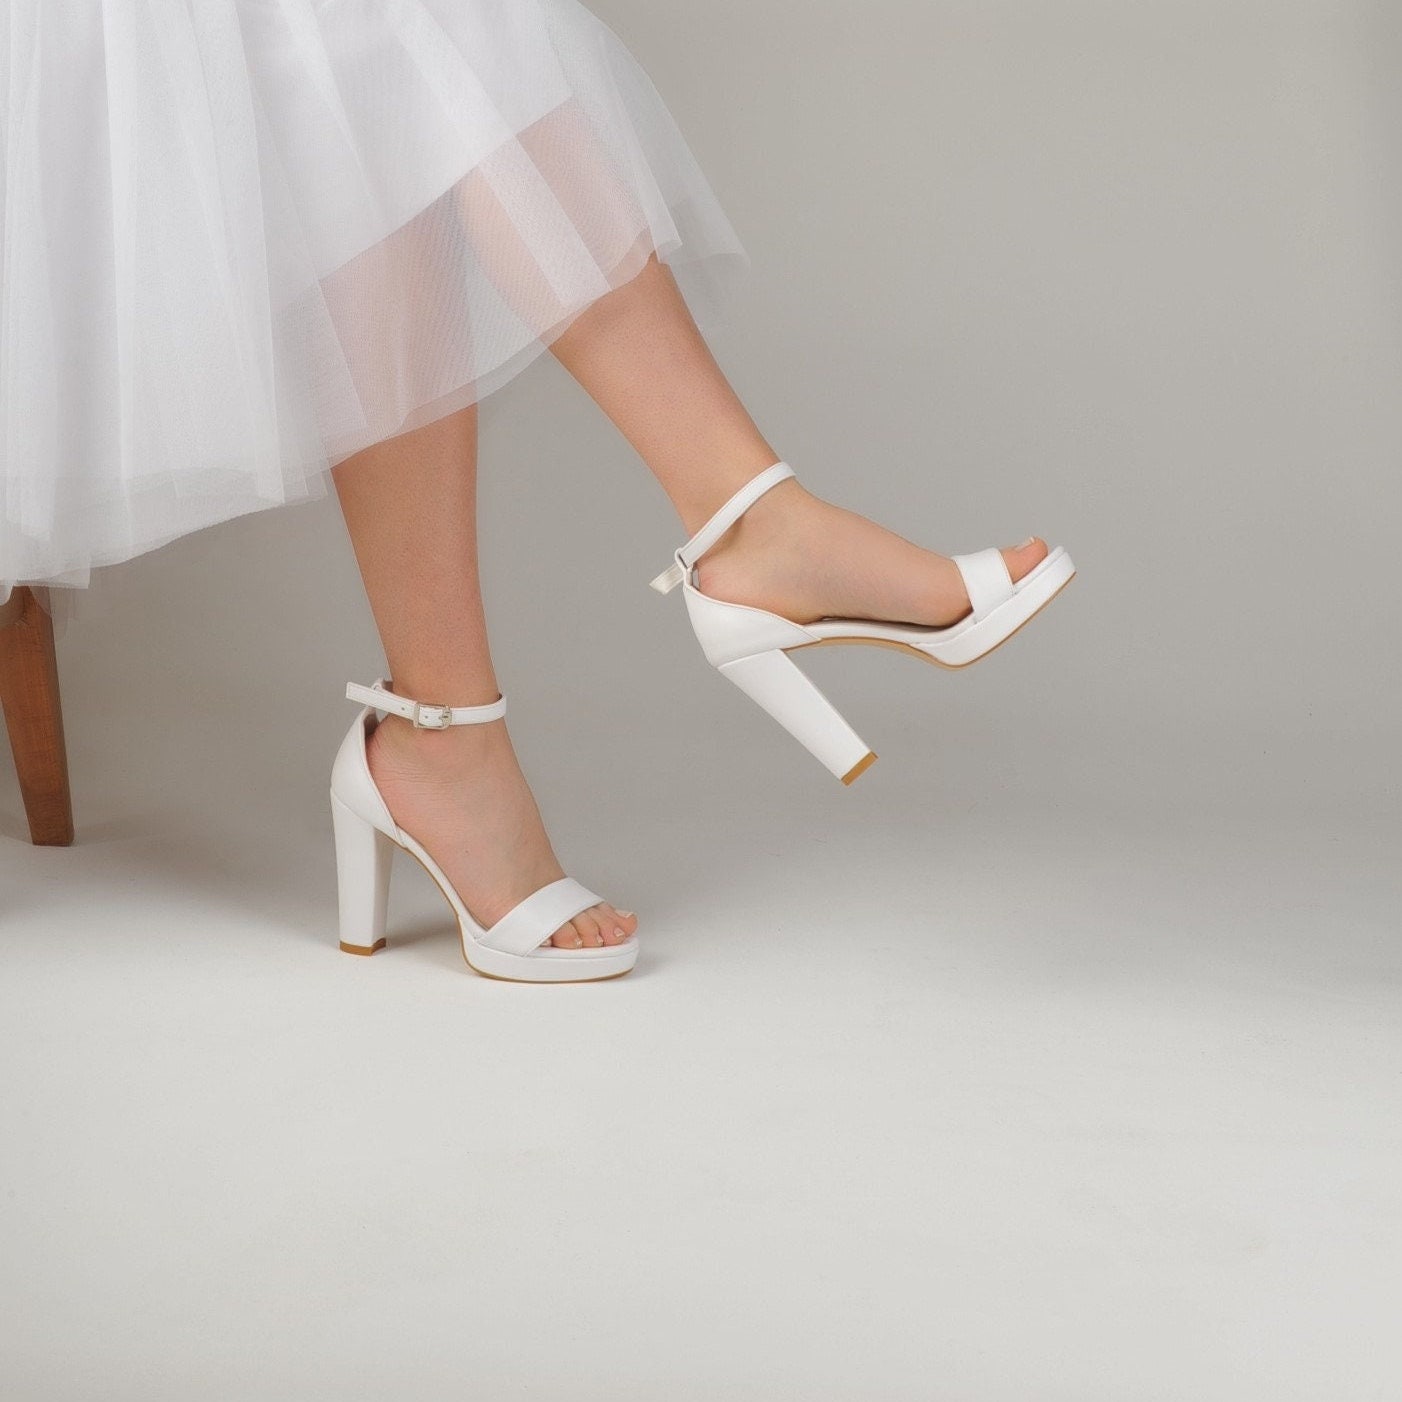 Custom Platform Wedding Sandals for Bride, Handmade Block Heel